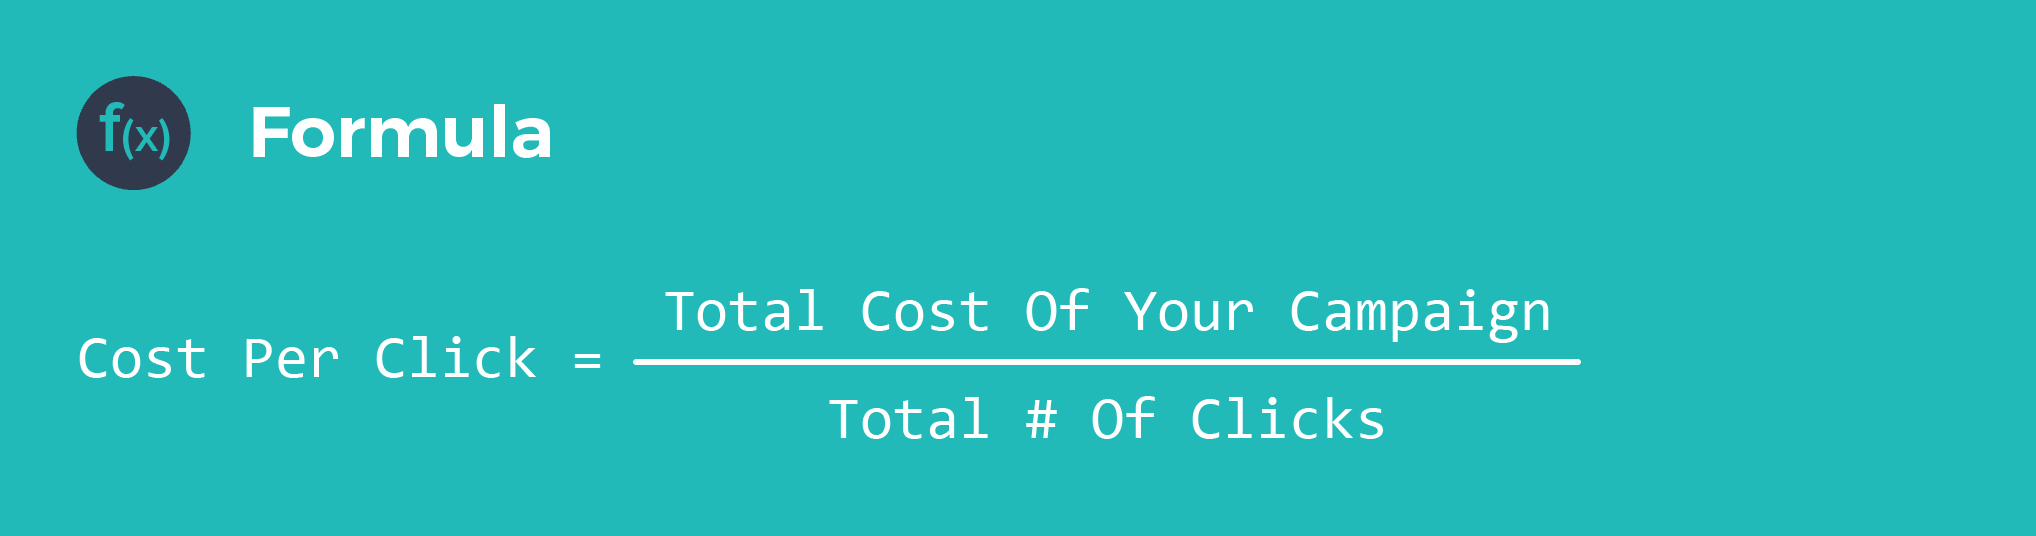 fórmula de custo por clique